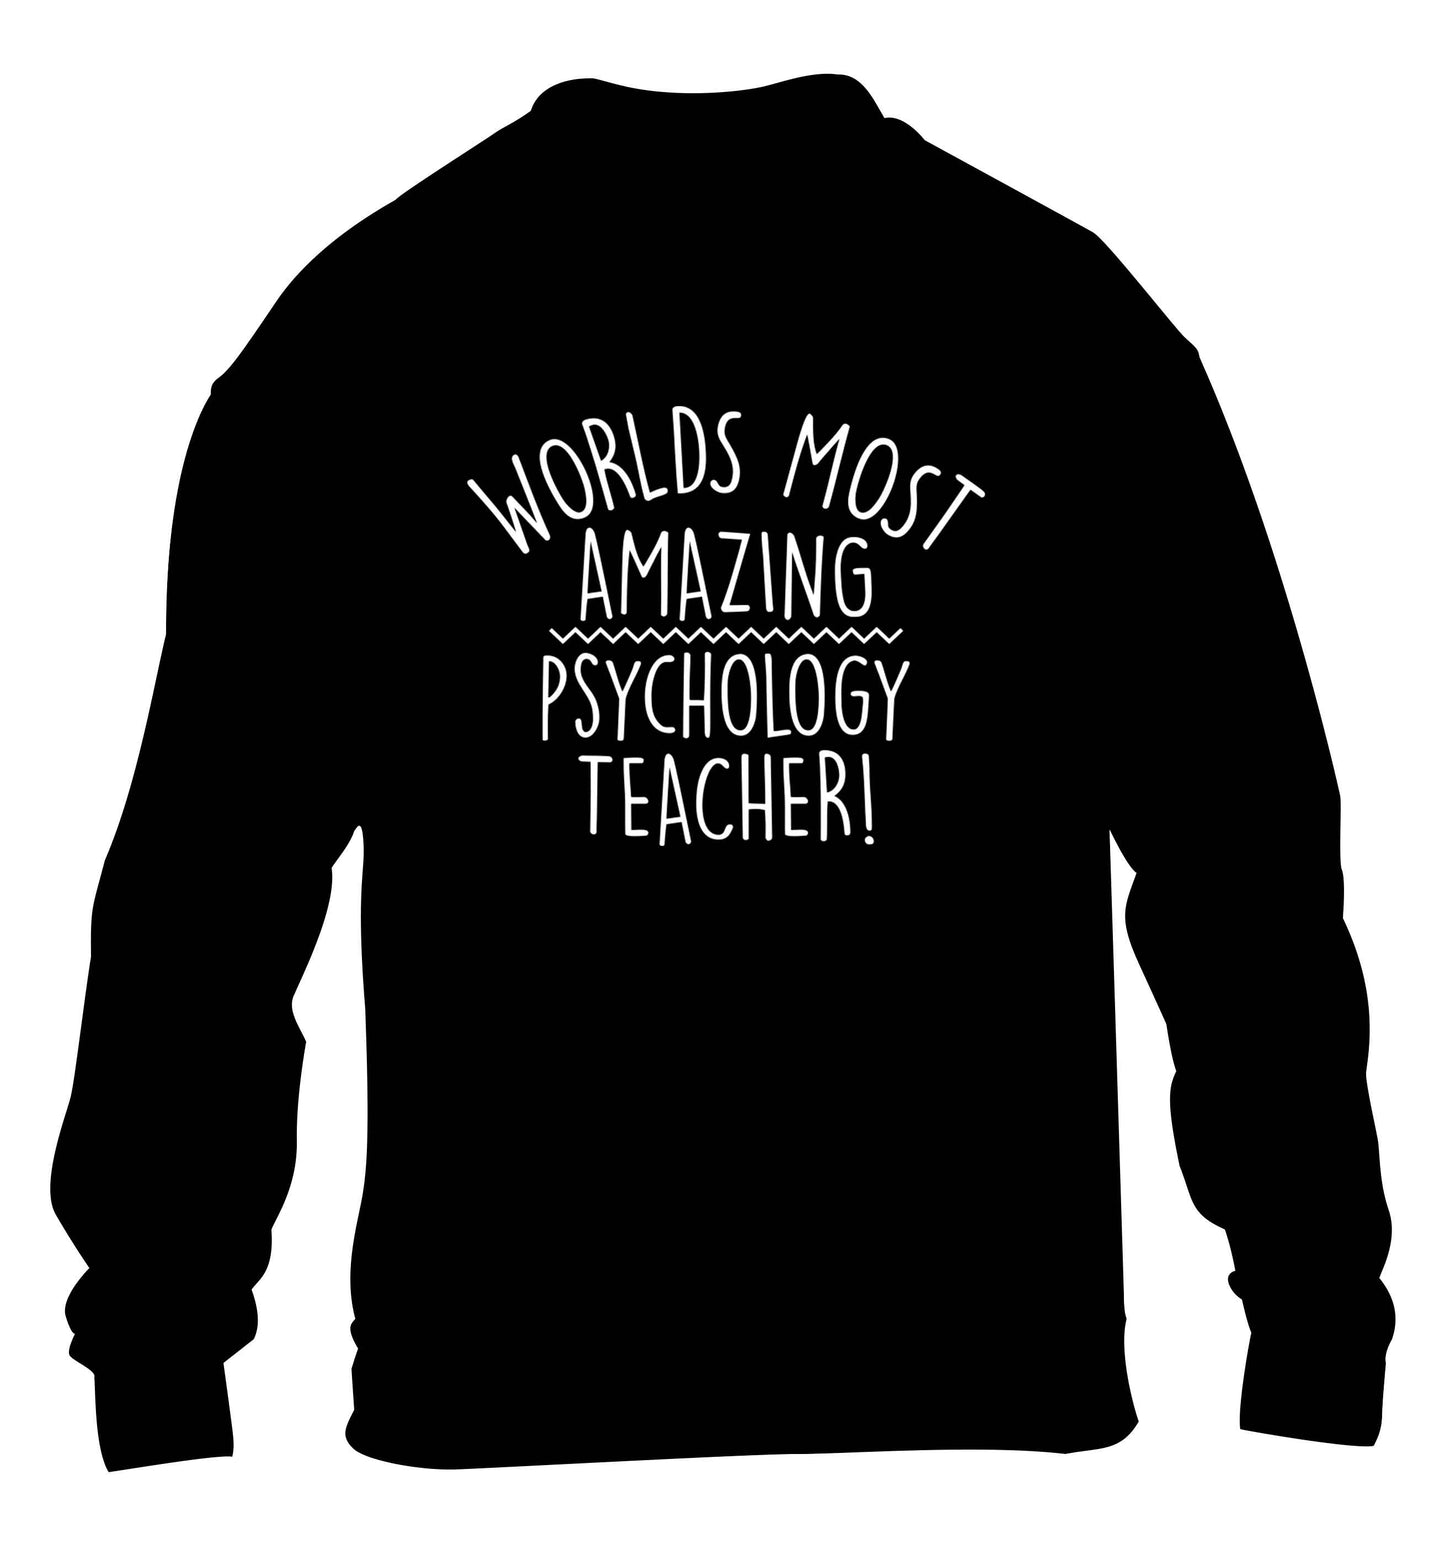 Worlds most amazing psychology teacher children's black sweater 12-13 Years